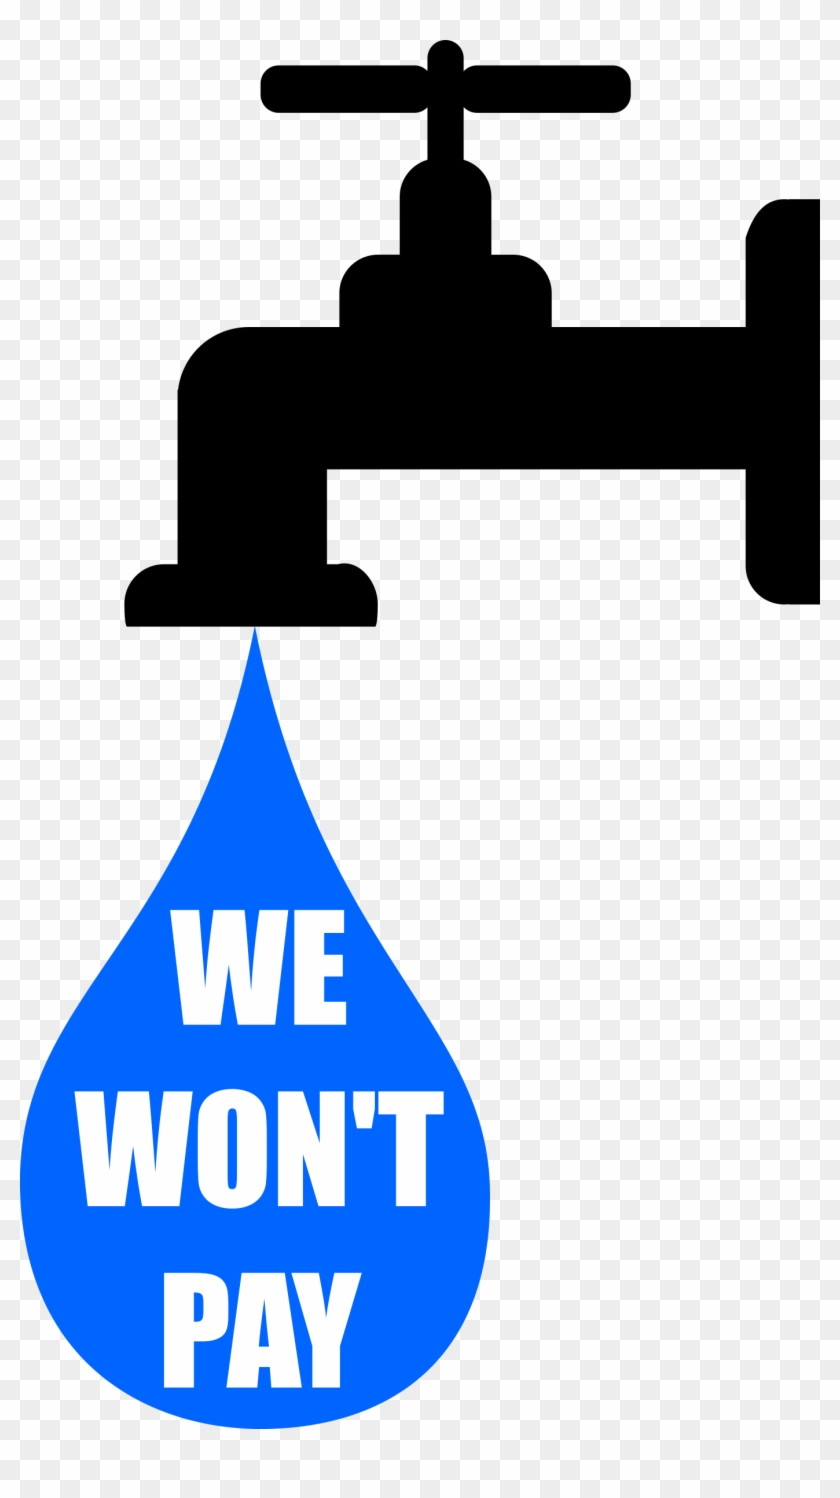 Drinking Water Job Contamination Clip Art - Drinking Water Job Contamination Clip Art #309354